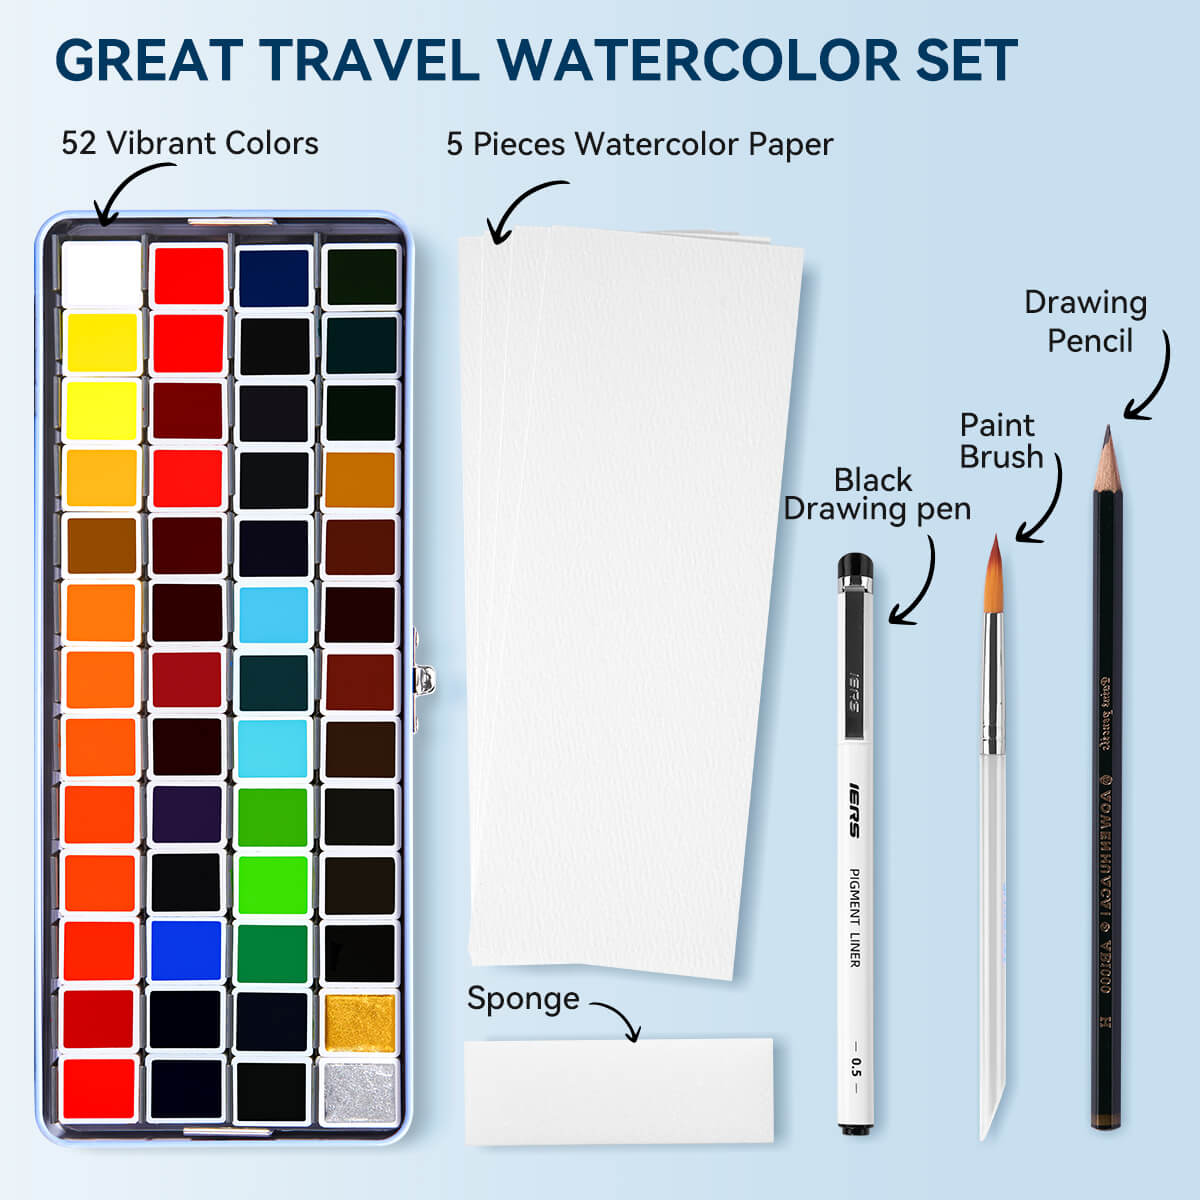 MeiLiang Solid Watercolor Paint Set 52 Colors Standard (Blue Box)